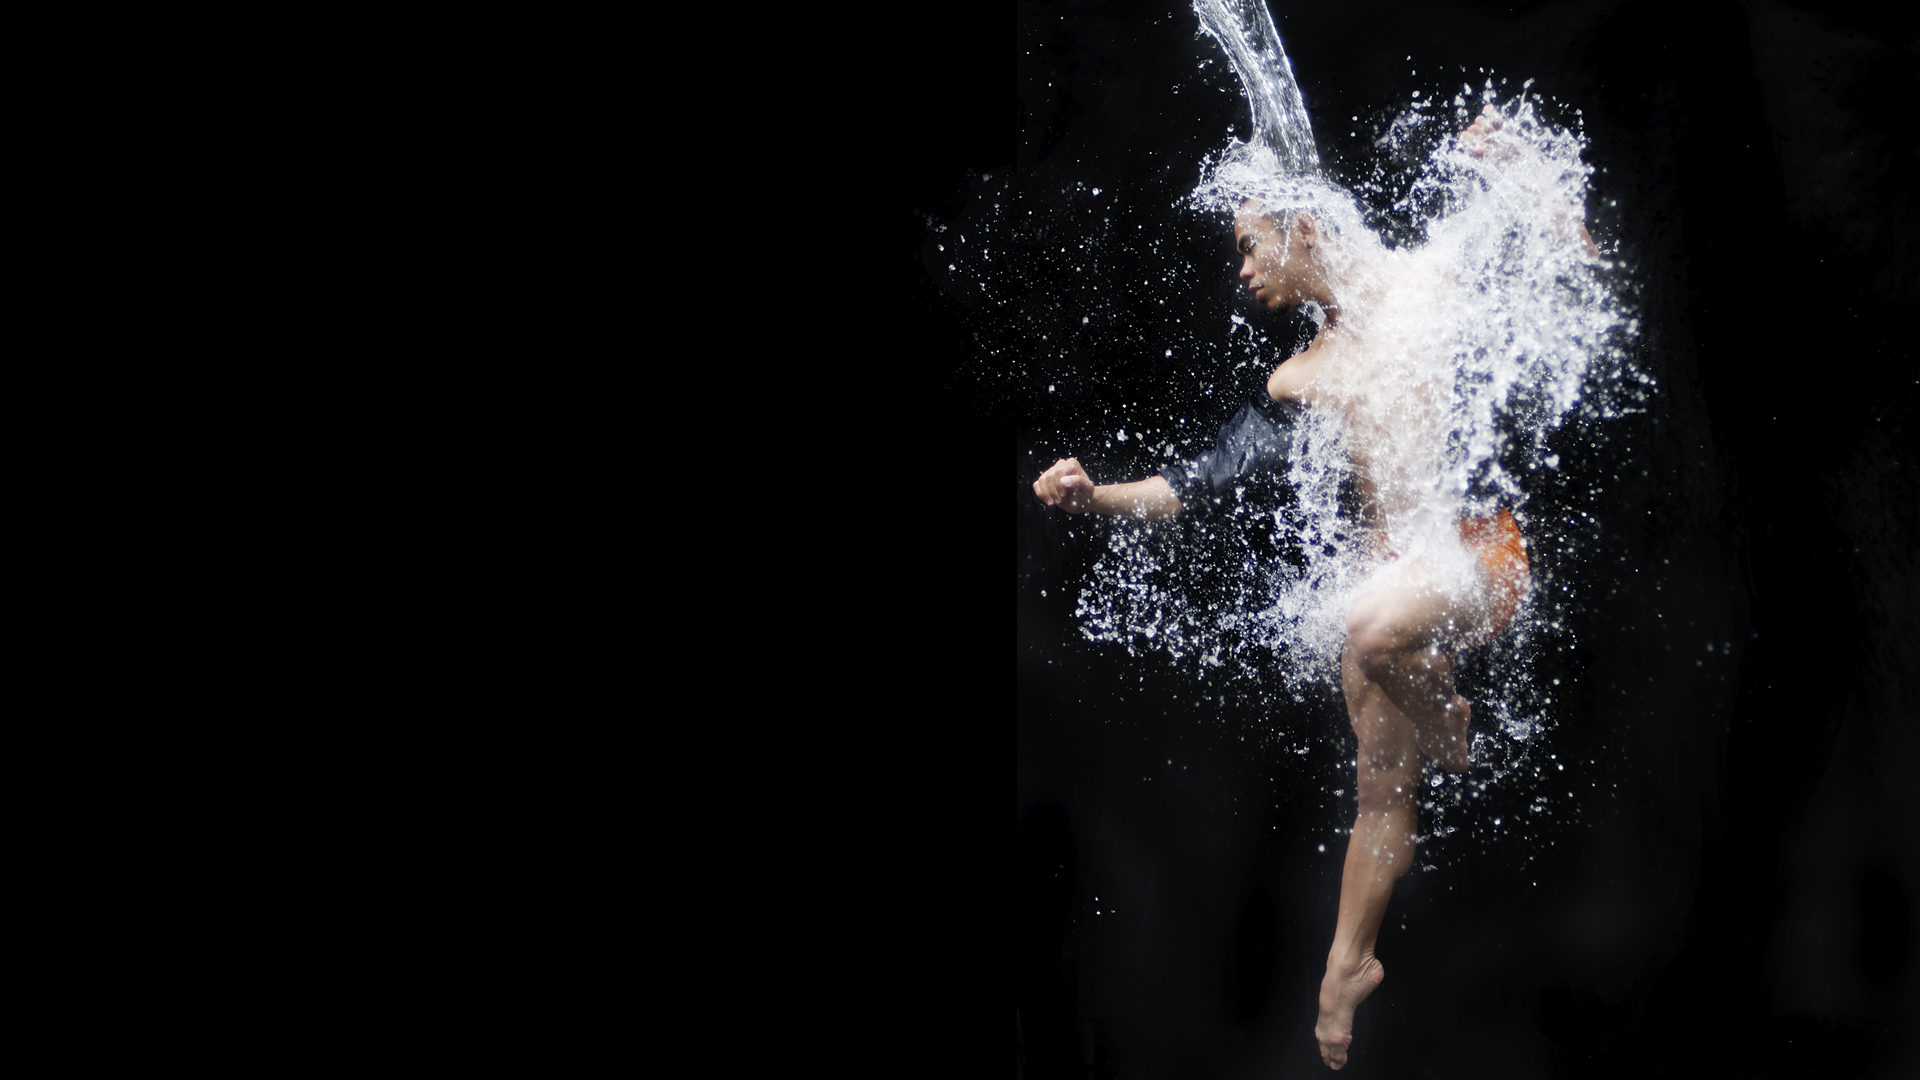 5 - WATER | Jason Garcia Ignacio